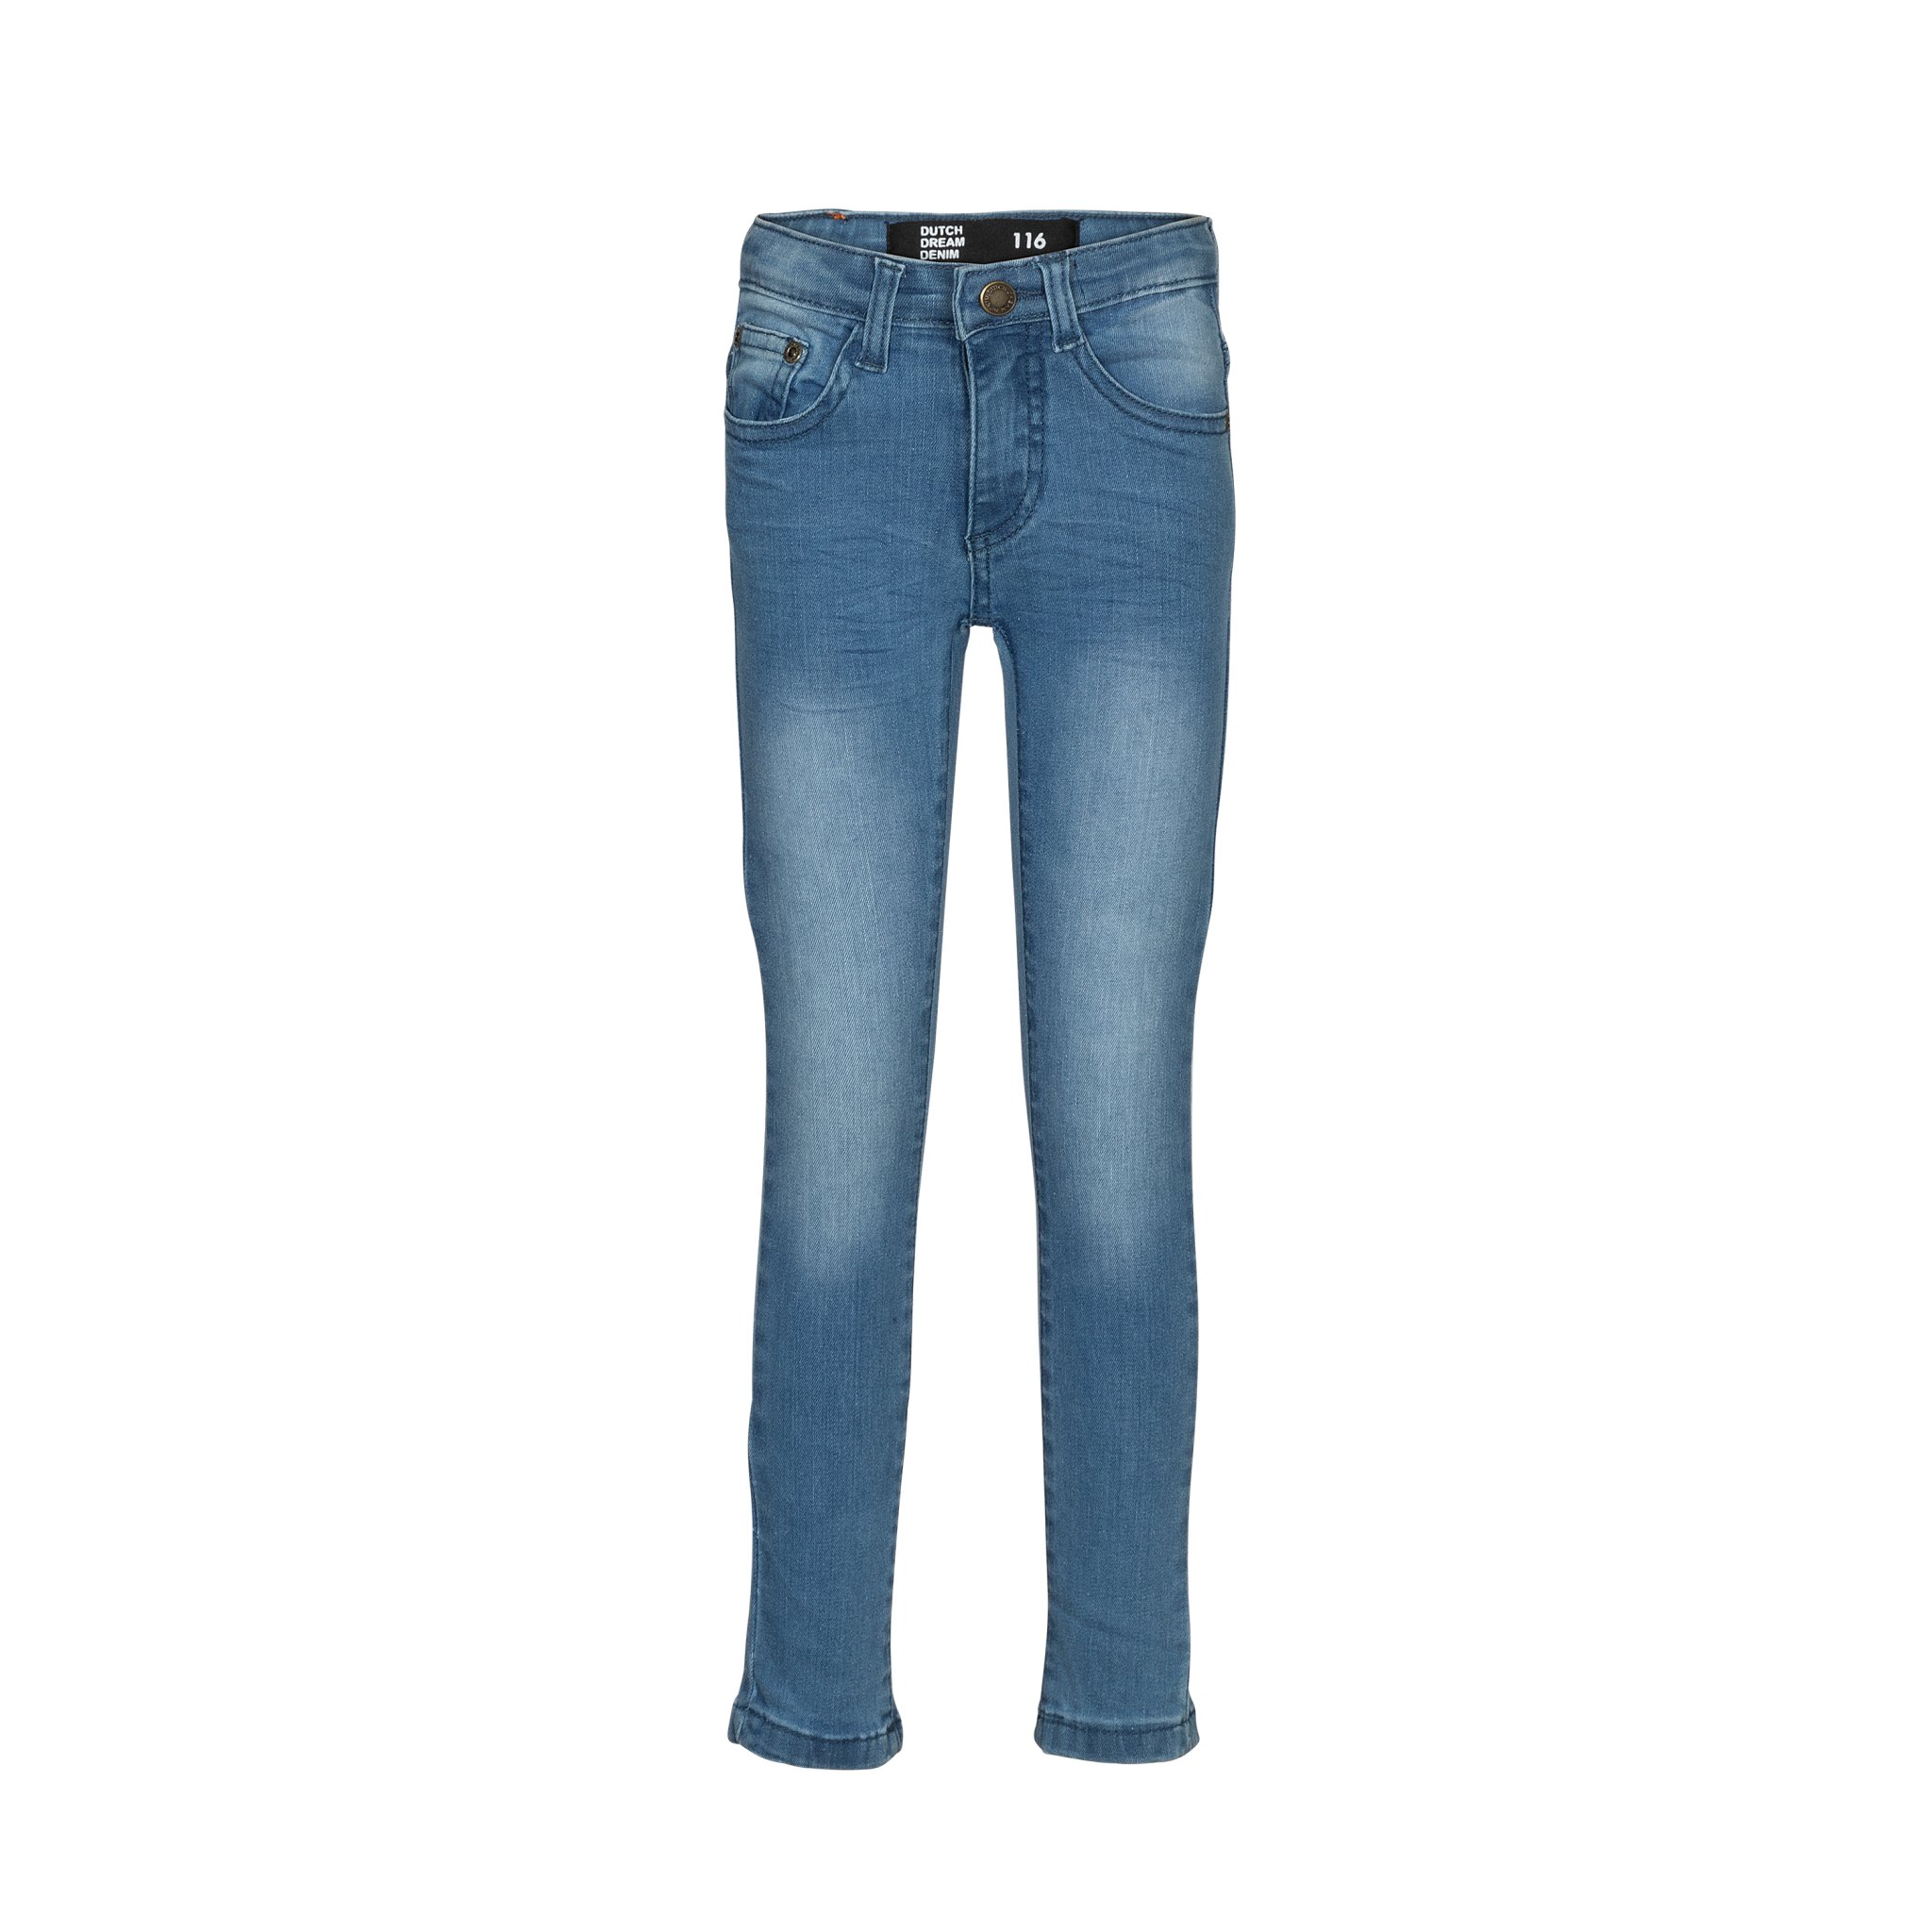 Afbeelding van Dutch Dream Denim Meiden jeans janga skinny fit mid